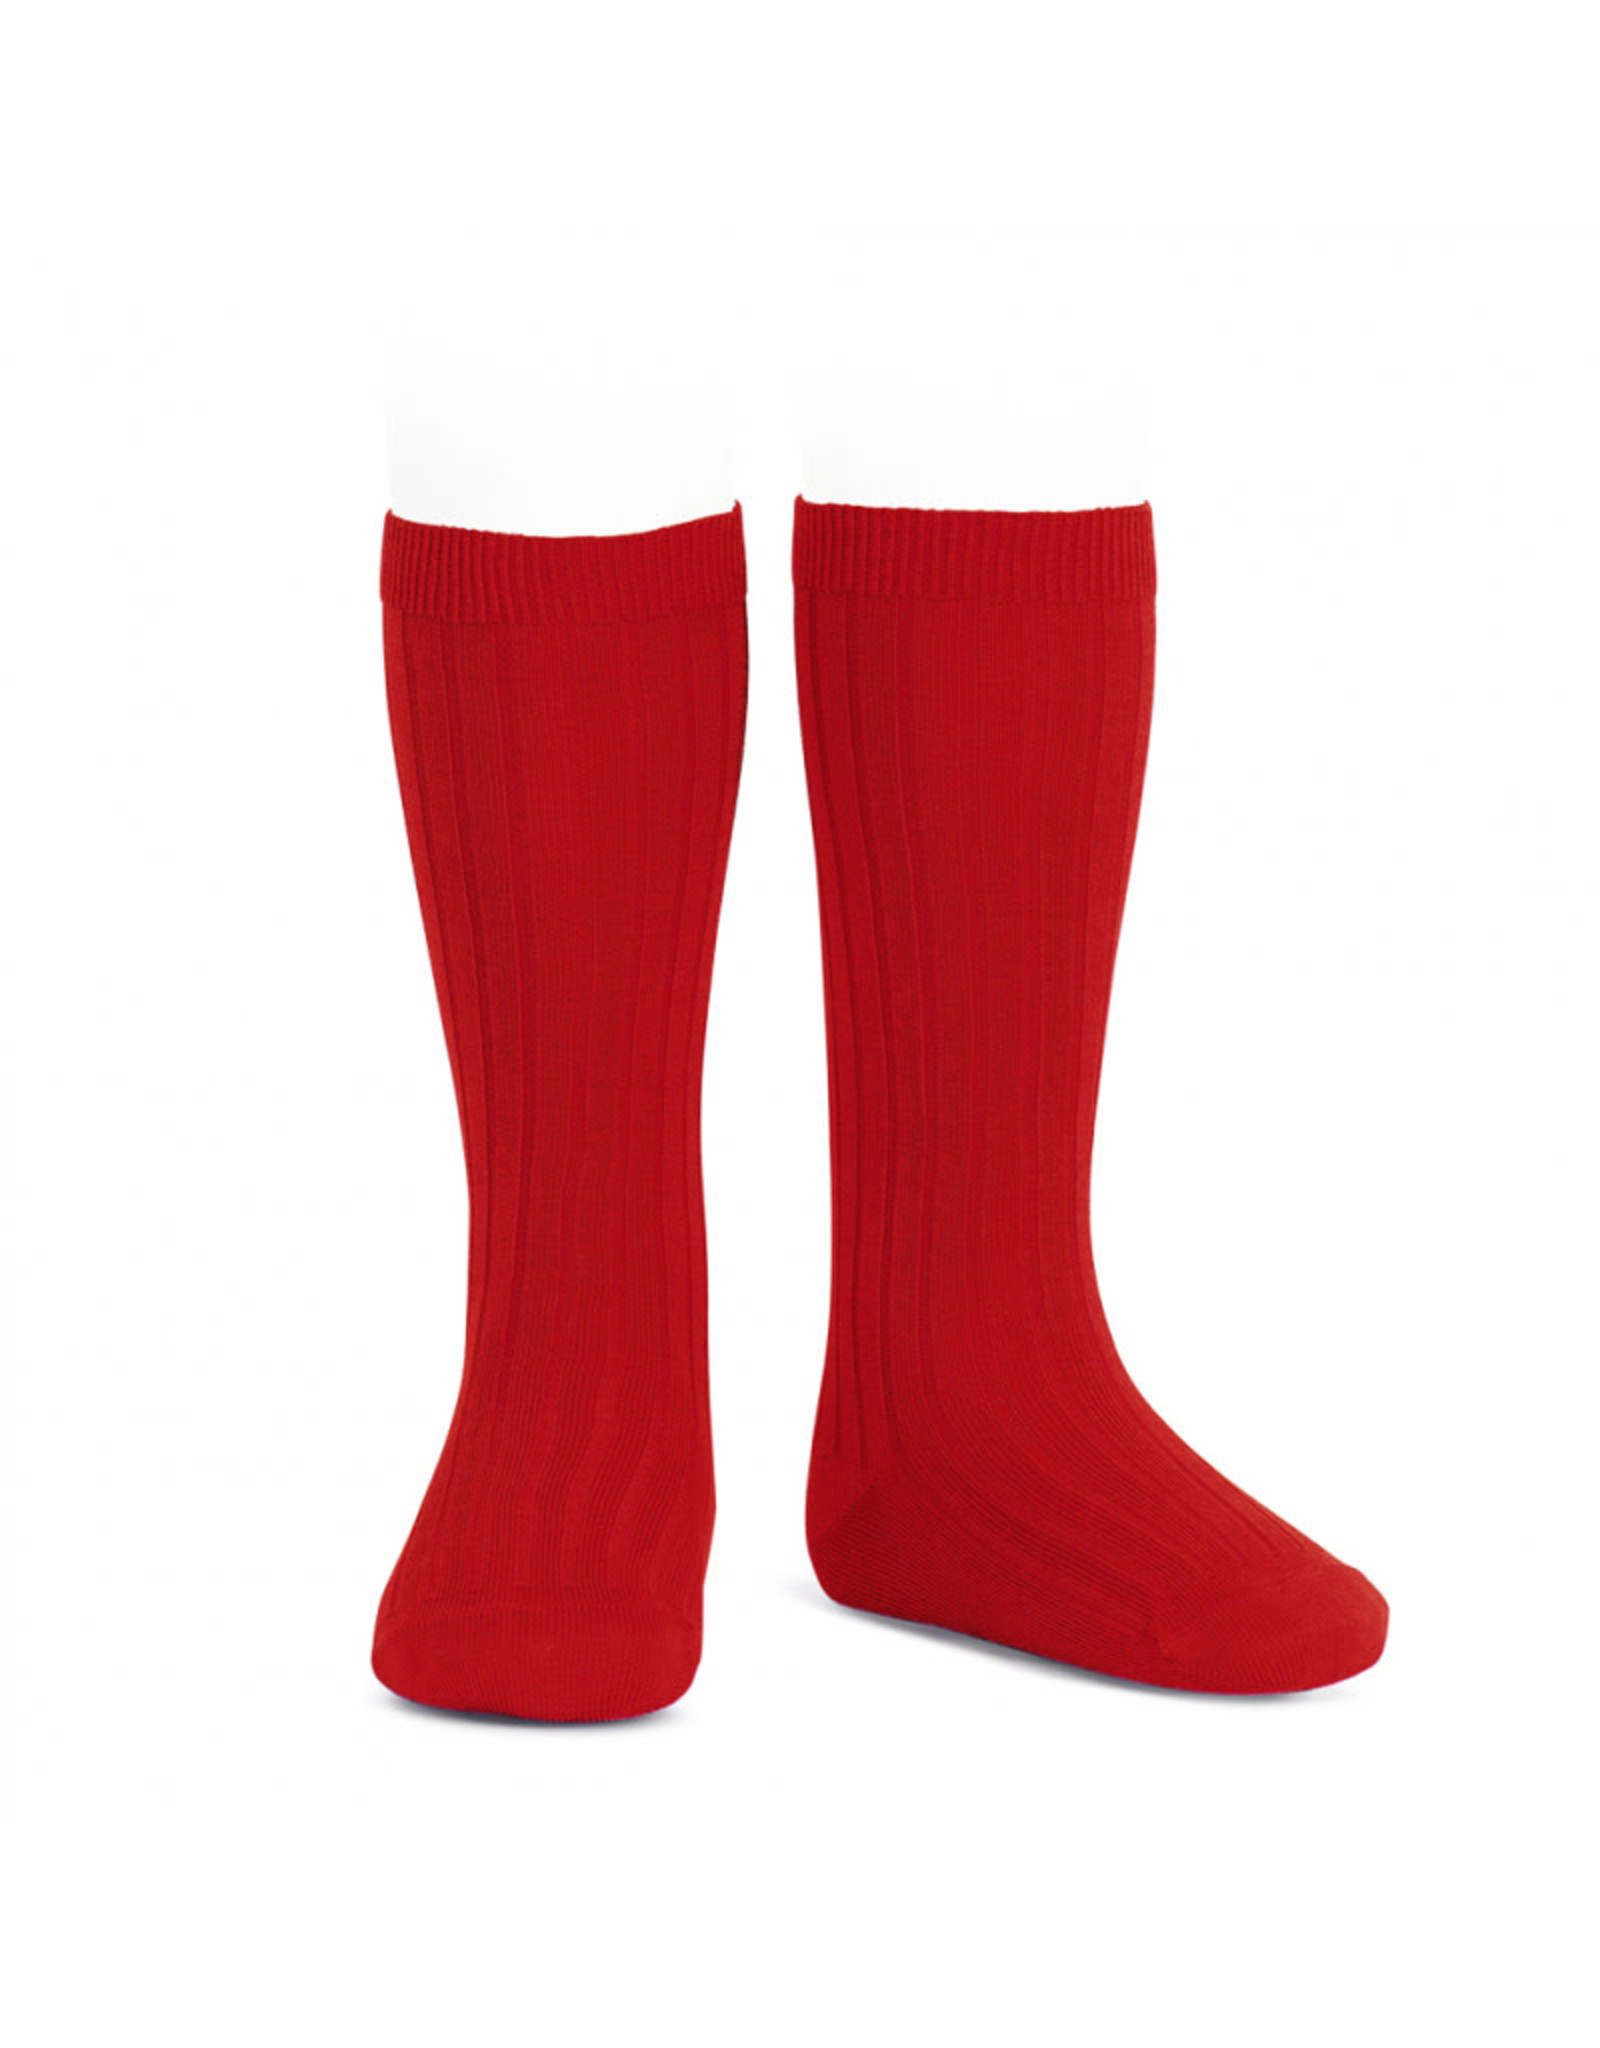 CONDOR Red Ribbed Socks